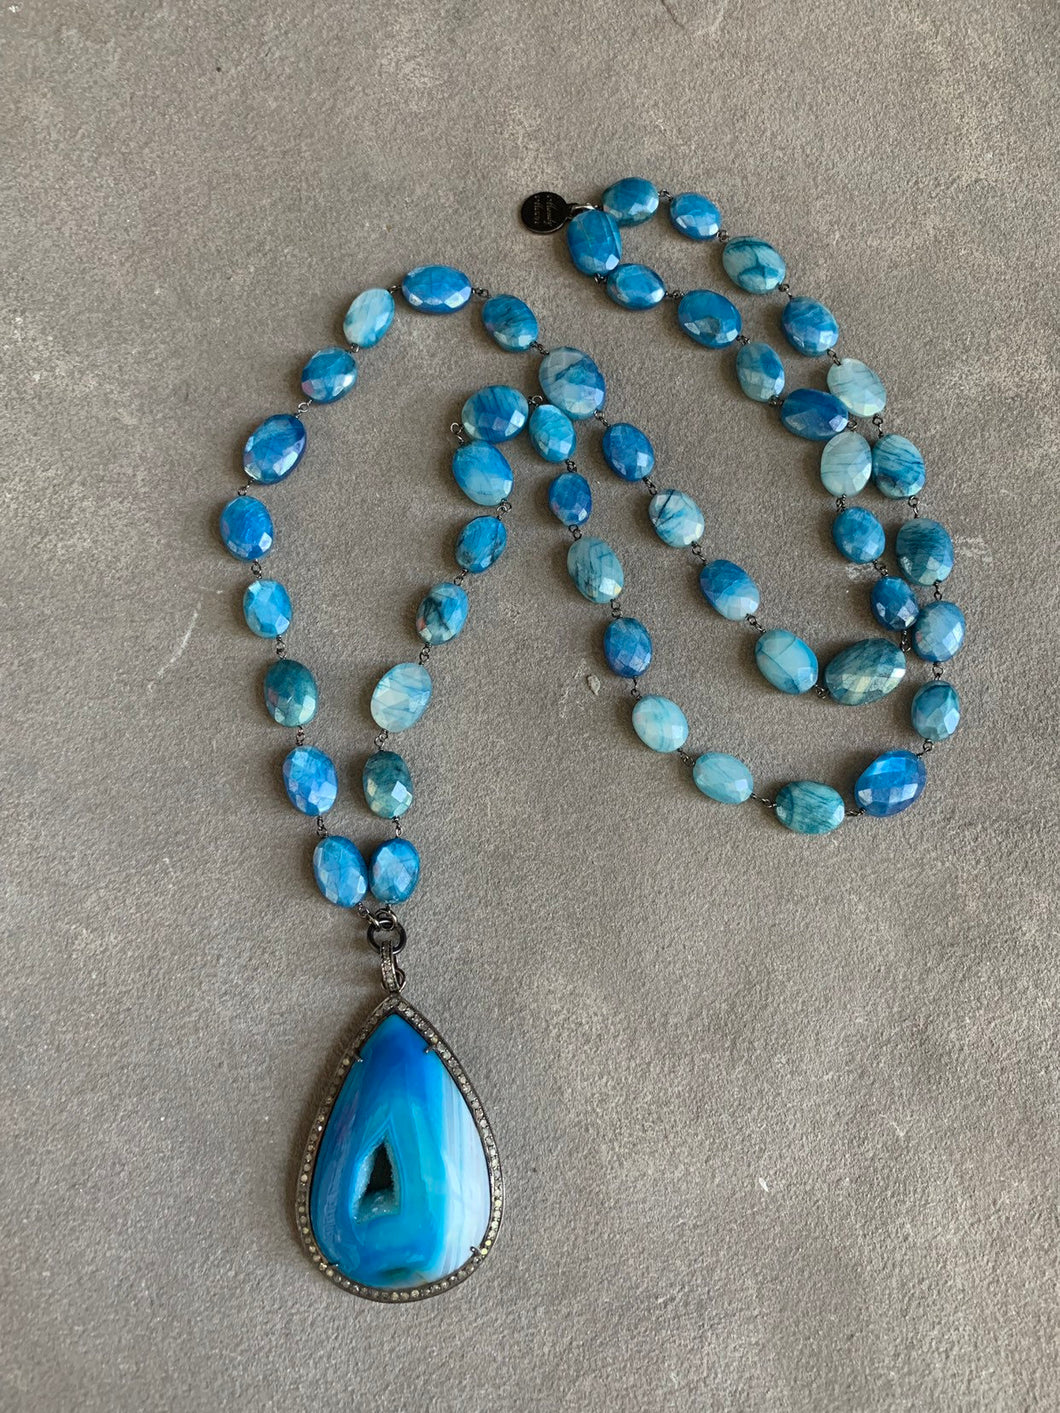 Striking druzy blue agate and diamond pendant necklace